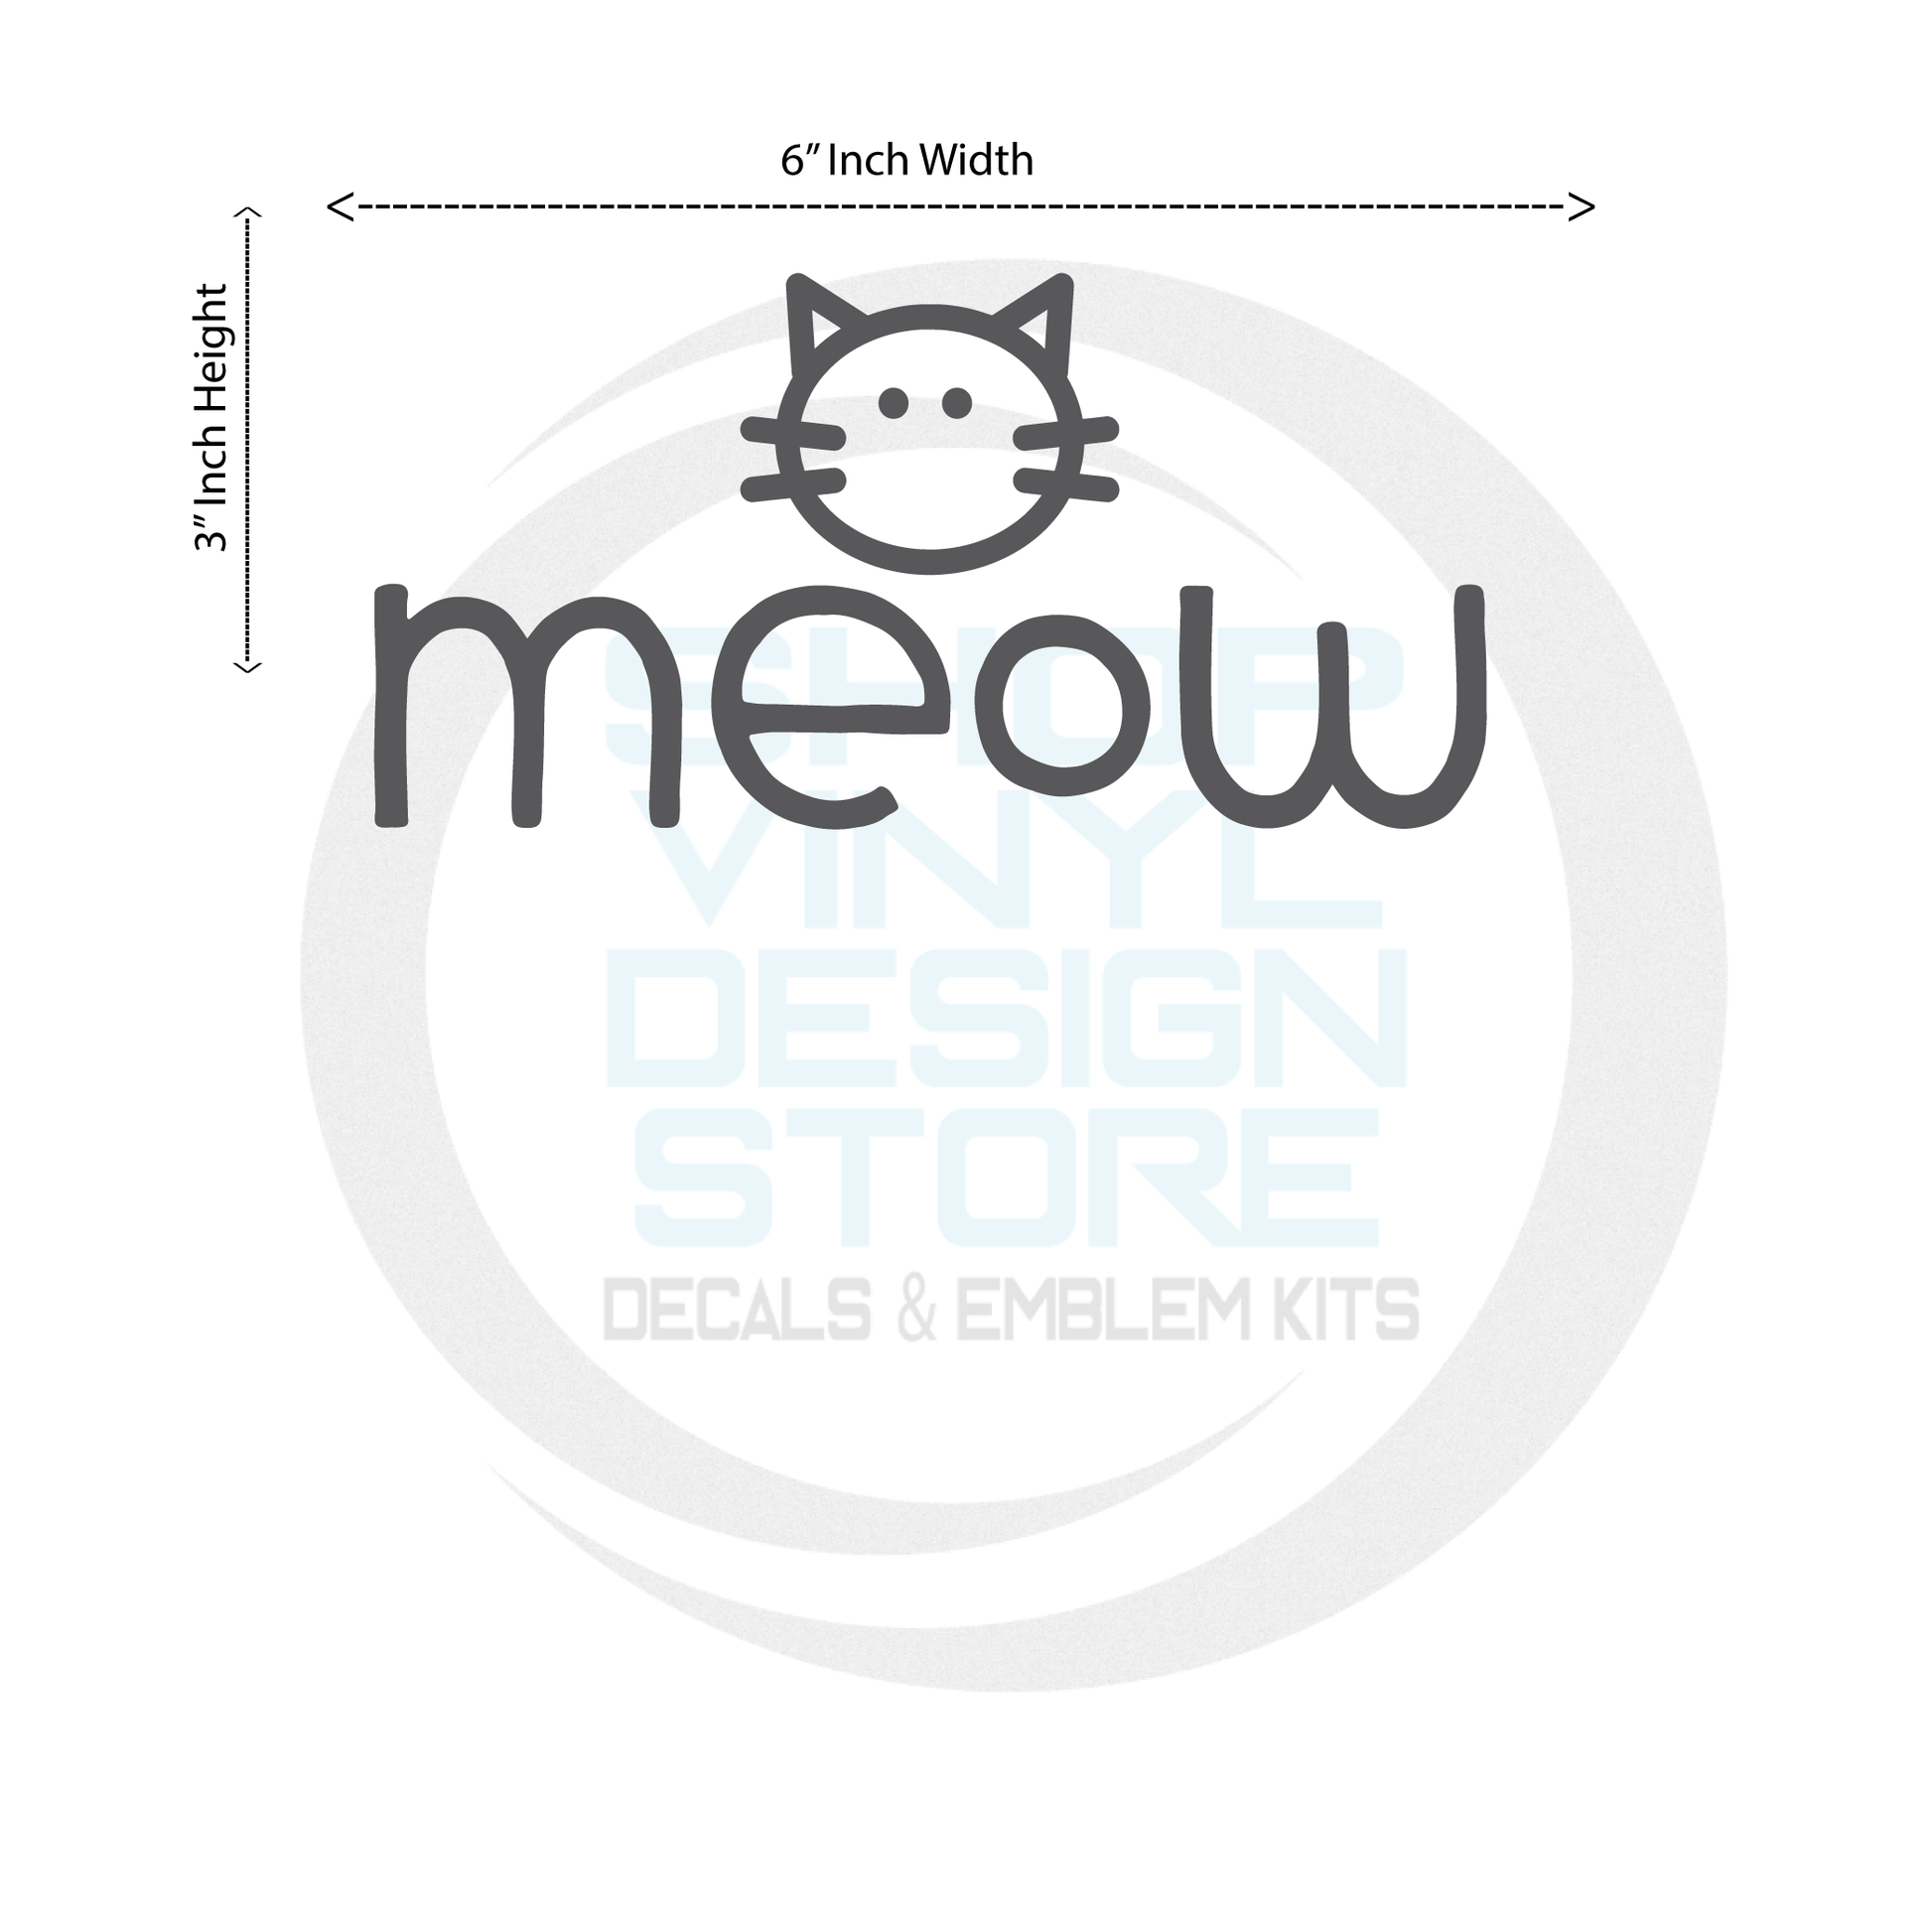 ShopVinylDesignStore.com Meow for Cat Treats Jar Wide 6"W x 3"H Shop Vinyl Design decals stickers